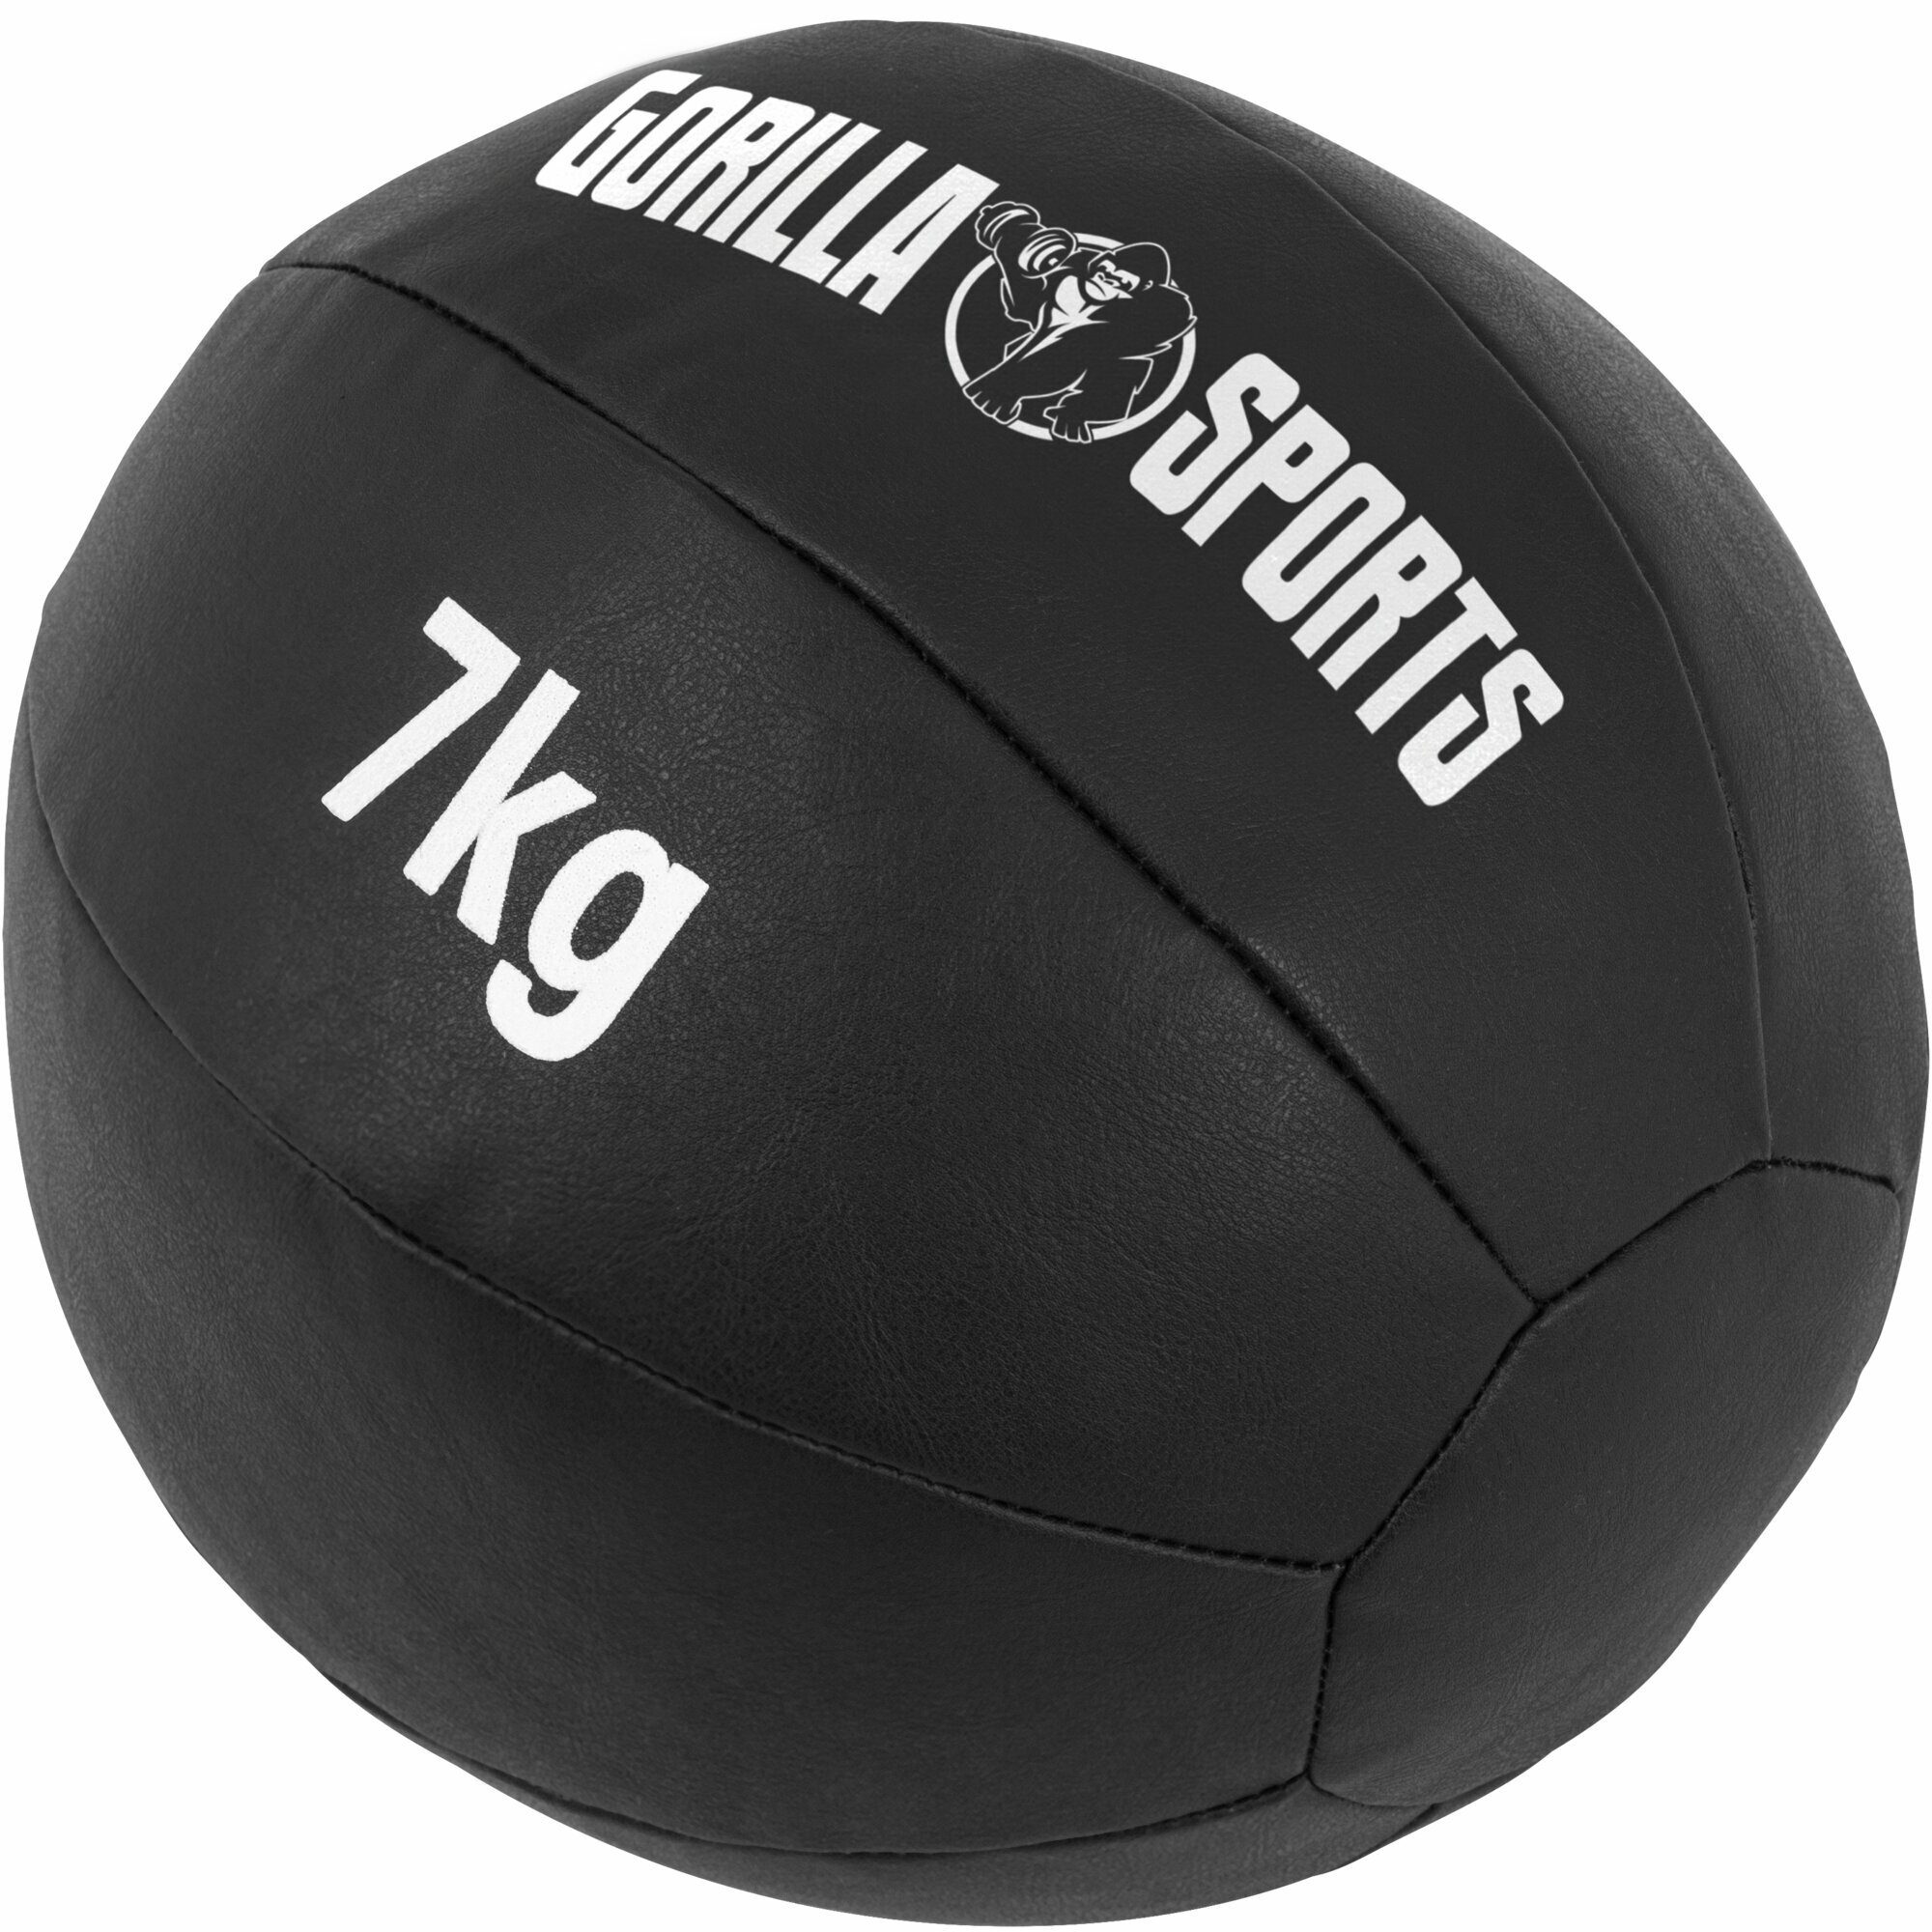 29cm, GORILLA aus 7 Gewichtsball SPORTS kg Trainingsball, Fitnessball, Einzeln/Set, Medizinball Leder,